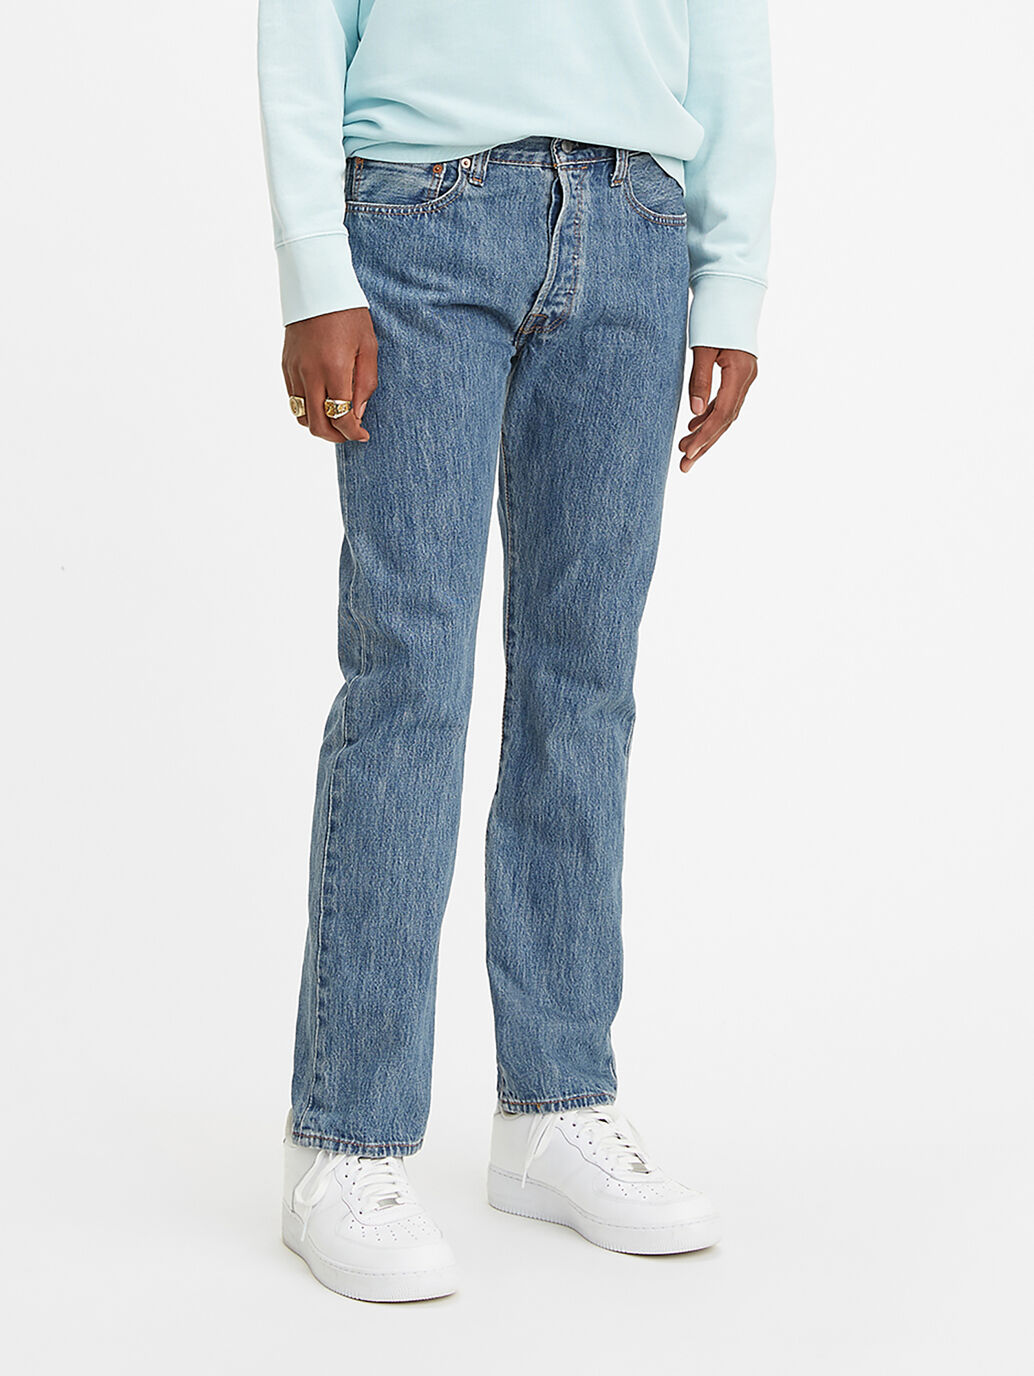 levi 501 jeans australia